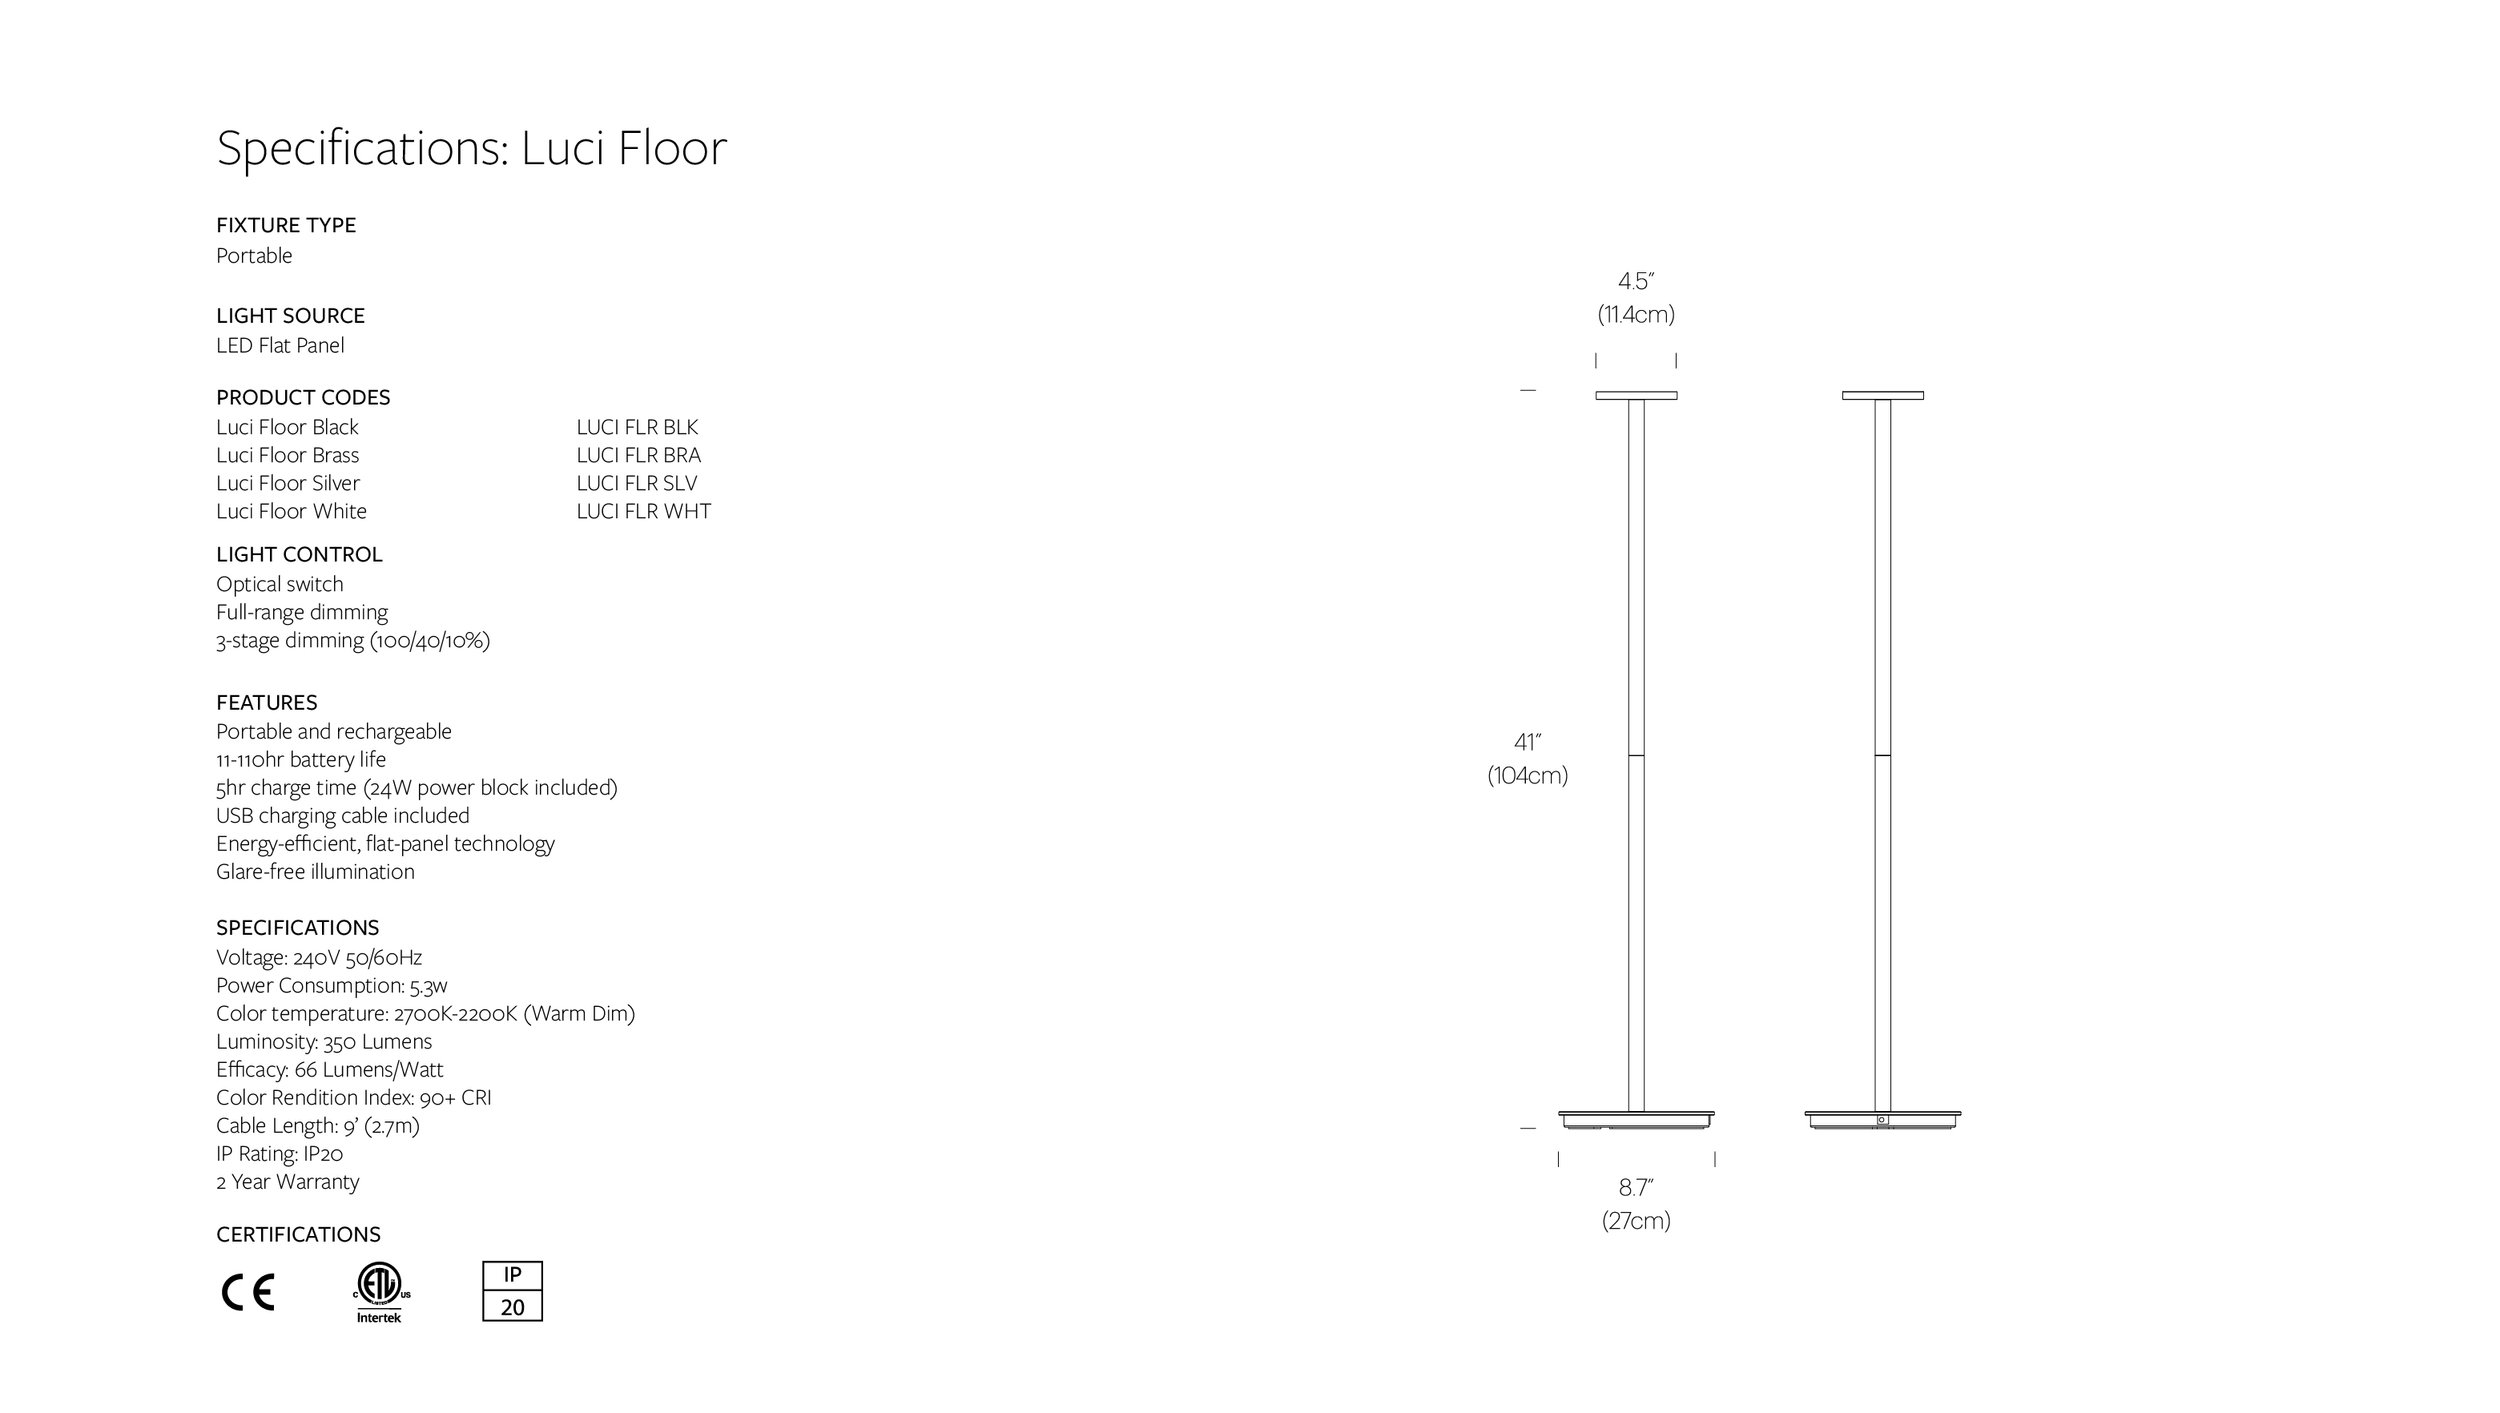 Pablo+Designs+Luci Table and Floor+EU+Spec+Sheet 022822-22.jpg